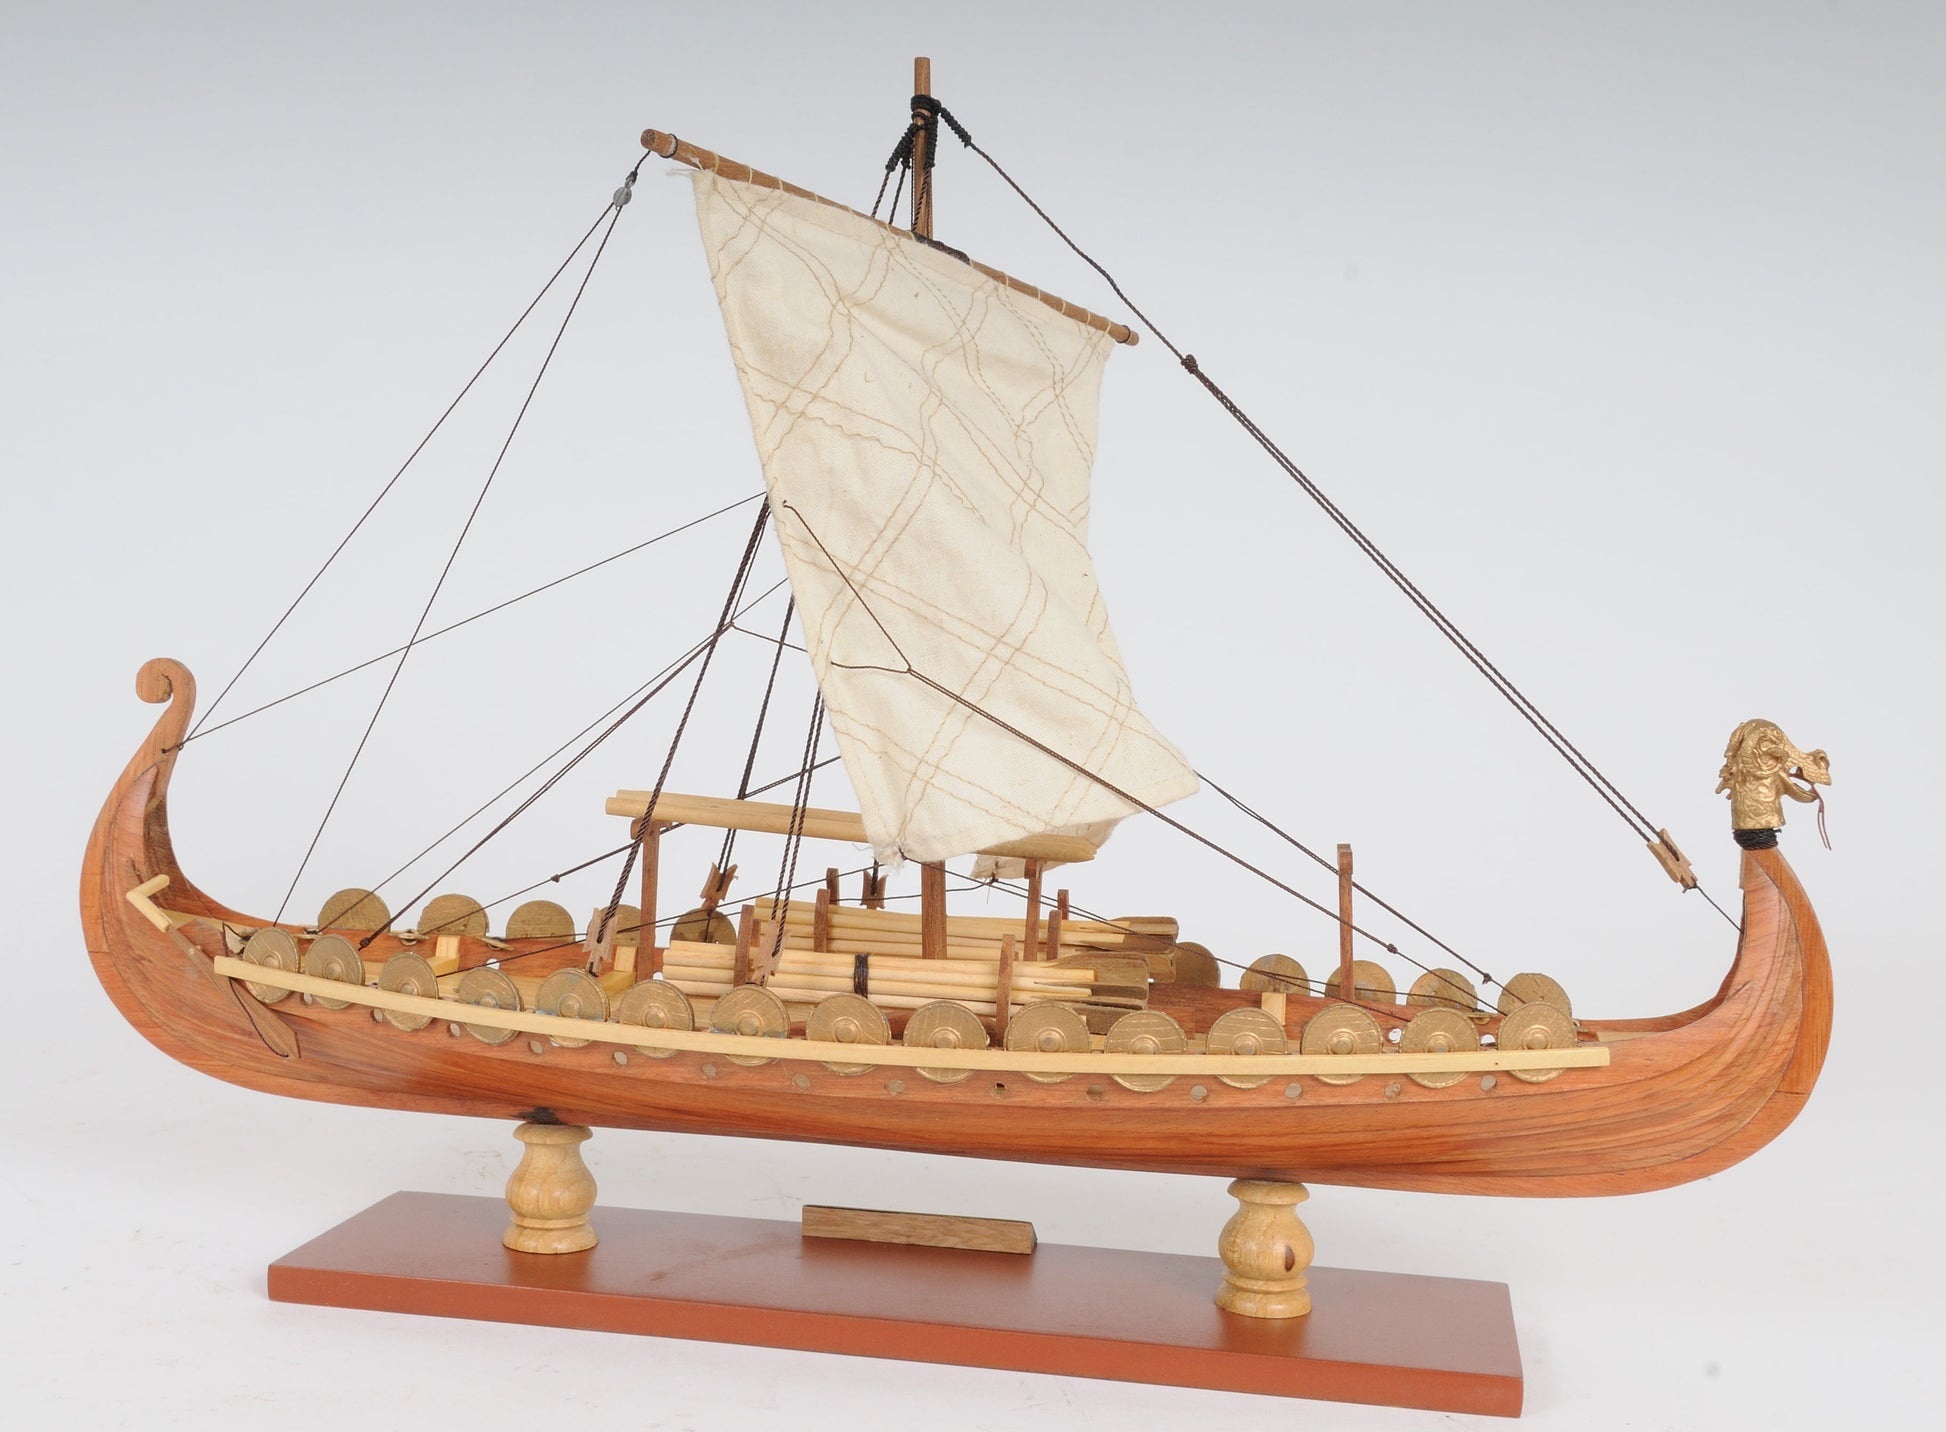 ALDO Hobbies & Creative Arts> Collectibles> Scale Model L: 15 W: 9 H: 12.5 Inches / NEW / wood Drakkar Viking Longshan Historic Replica Wood Small Model Sailboat Assembled